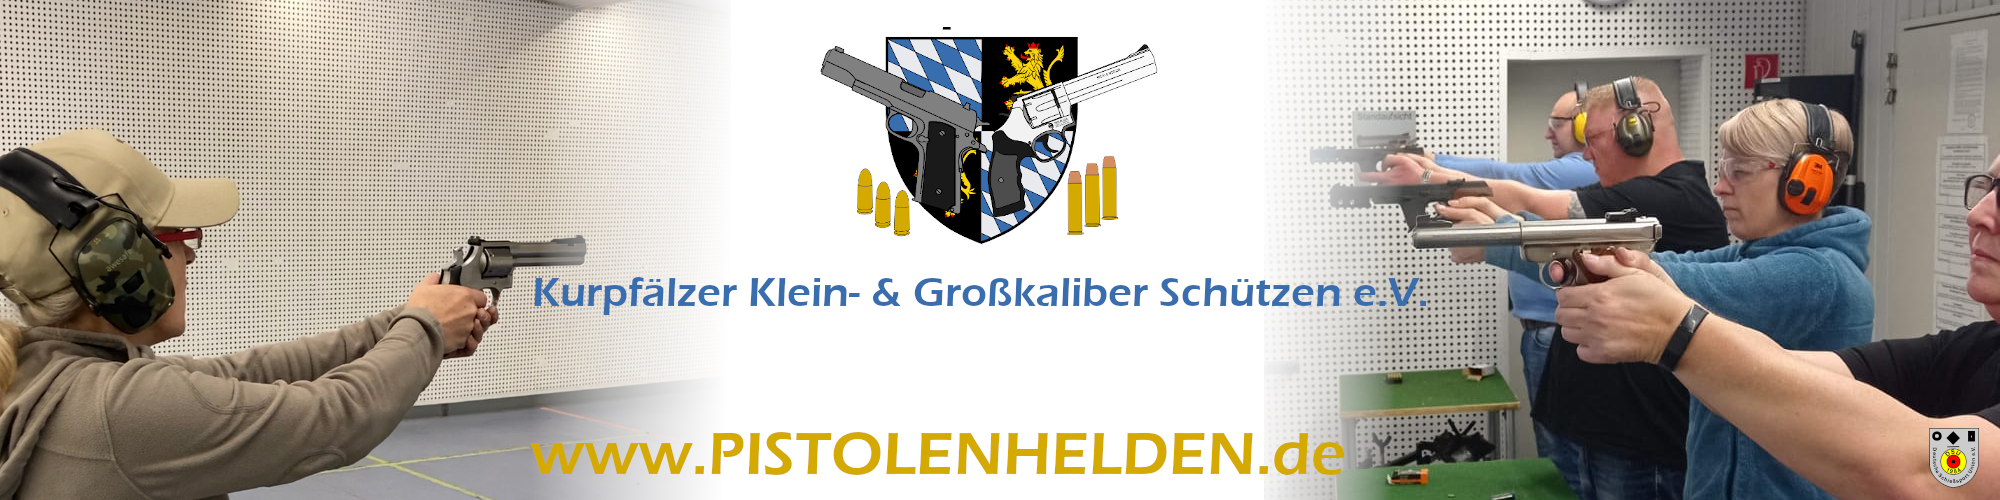 Kurpfälzer Klein- & Großkaliber Schützen e.V. - www.pistolenhelden.de